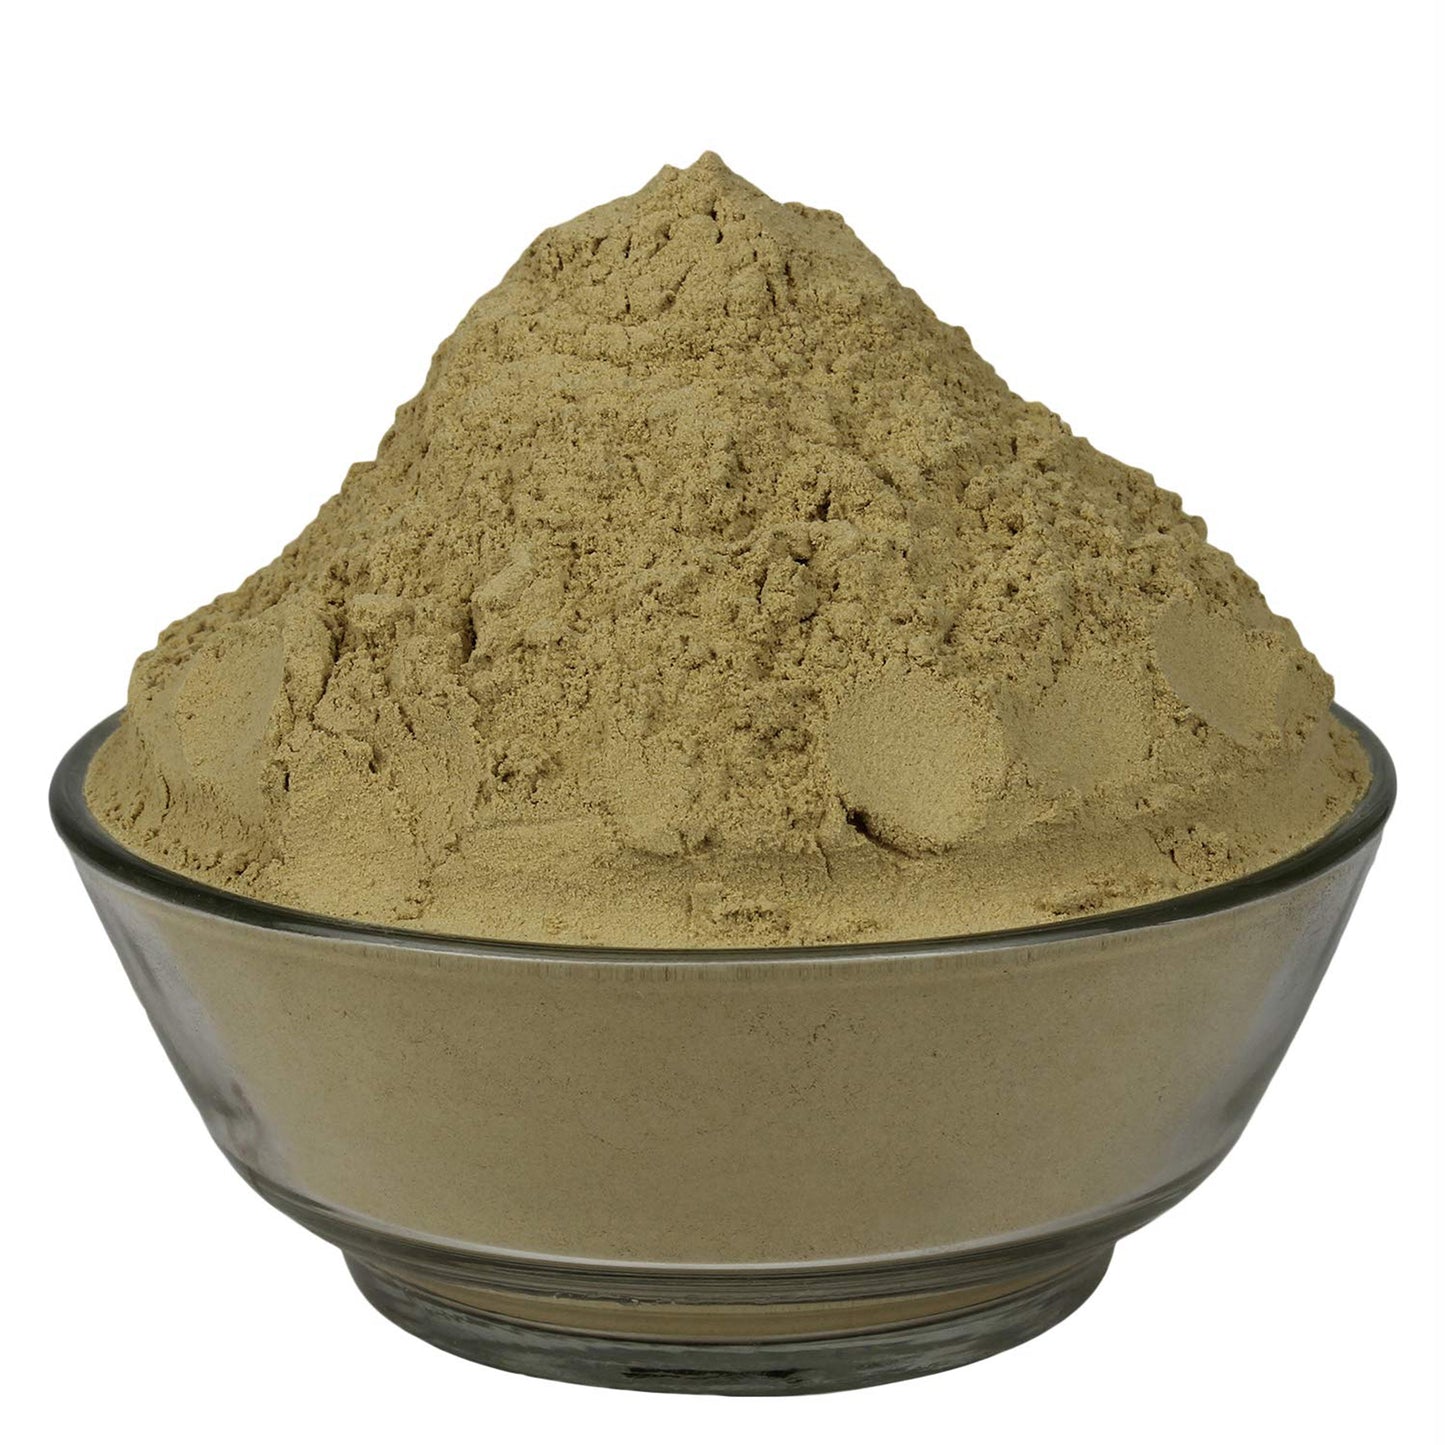 Bhindi Powder - Dry Lady Finger Powder